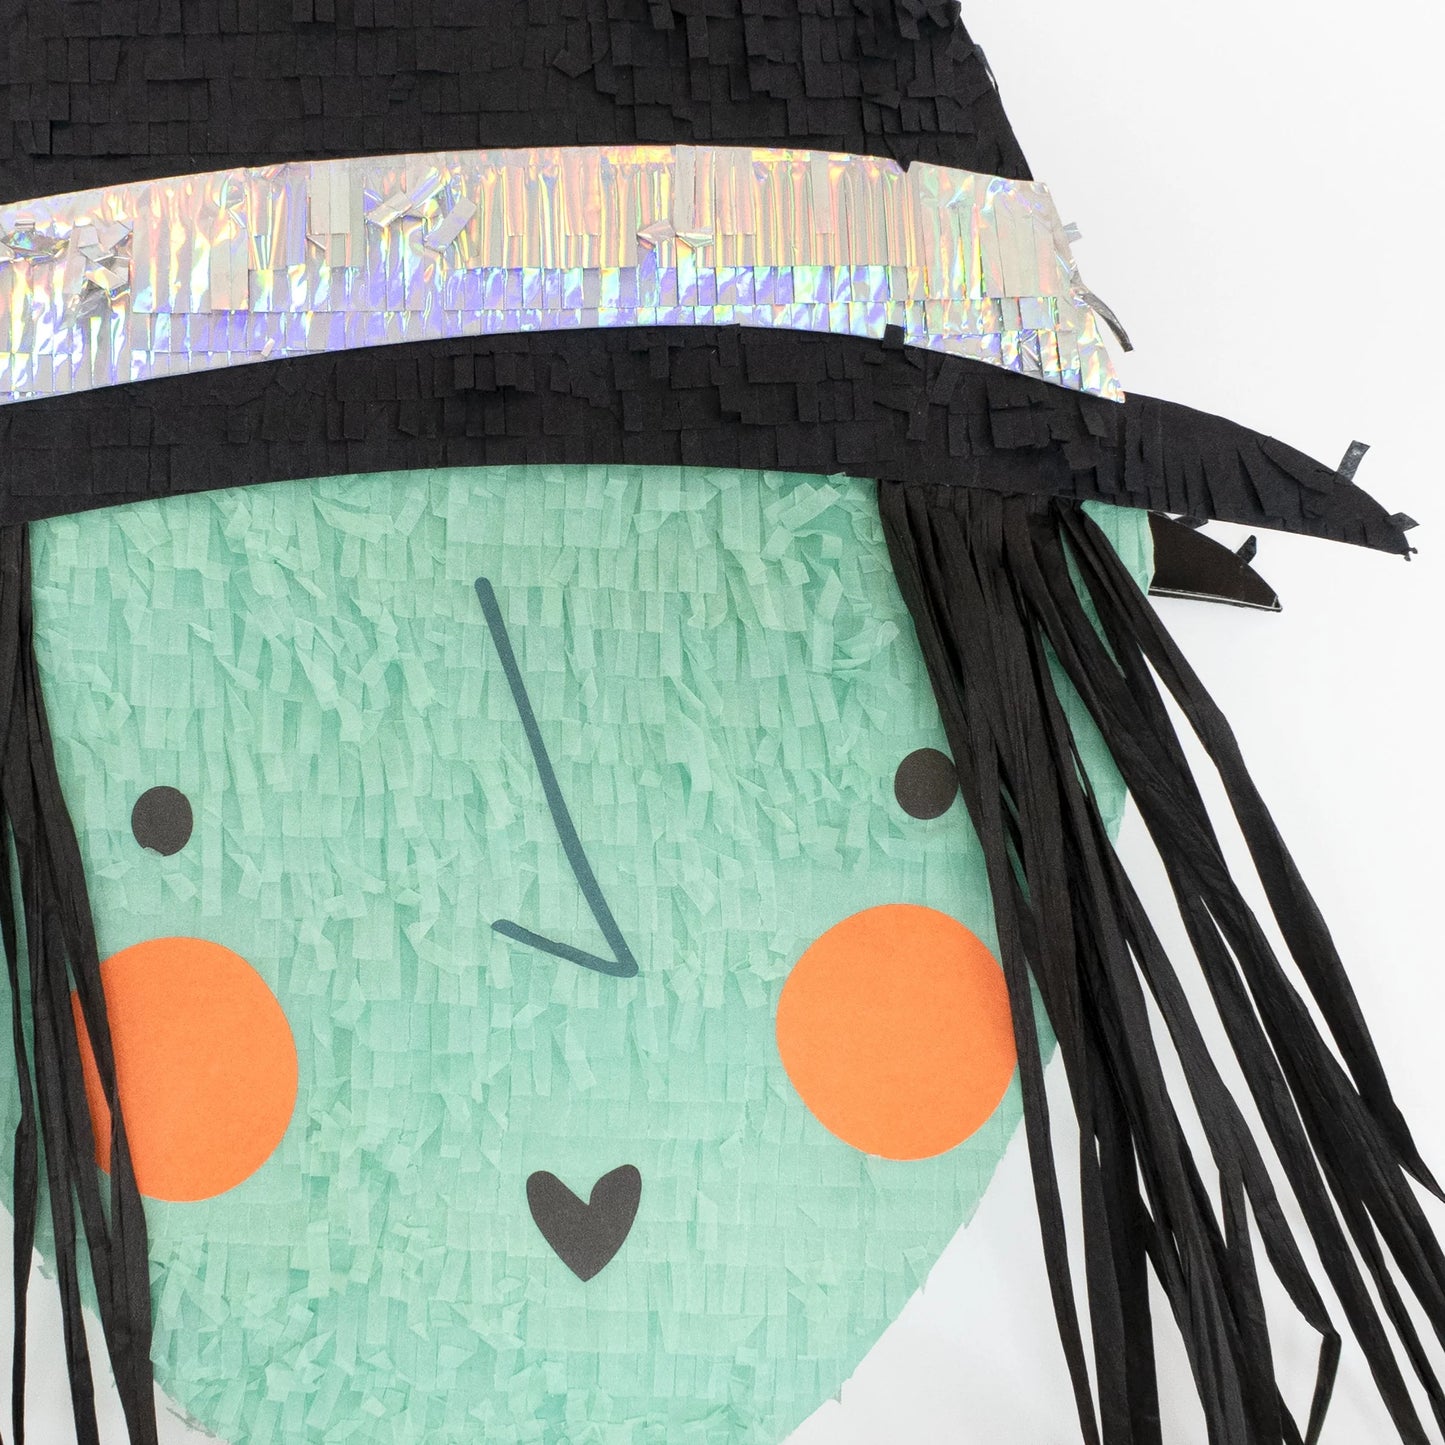 Party Piñata: Halloween Witch